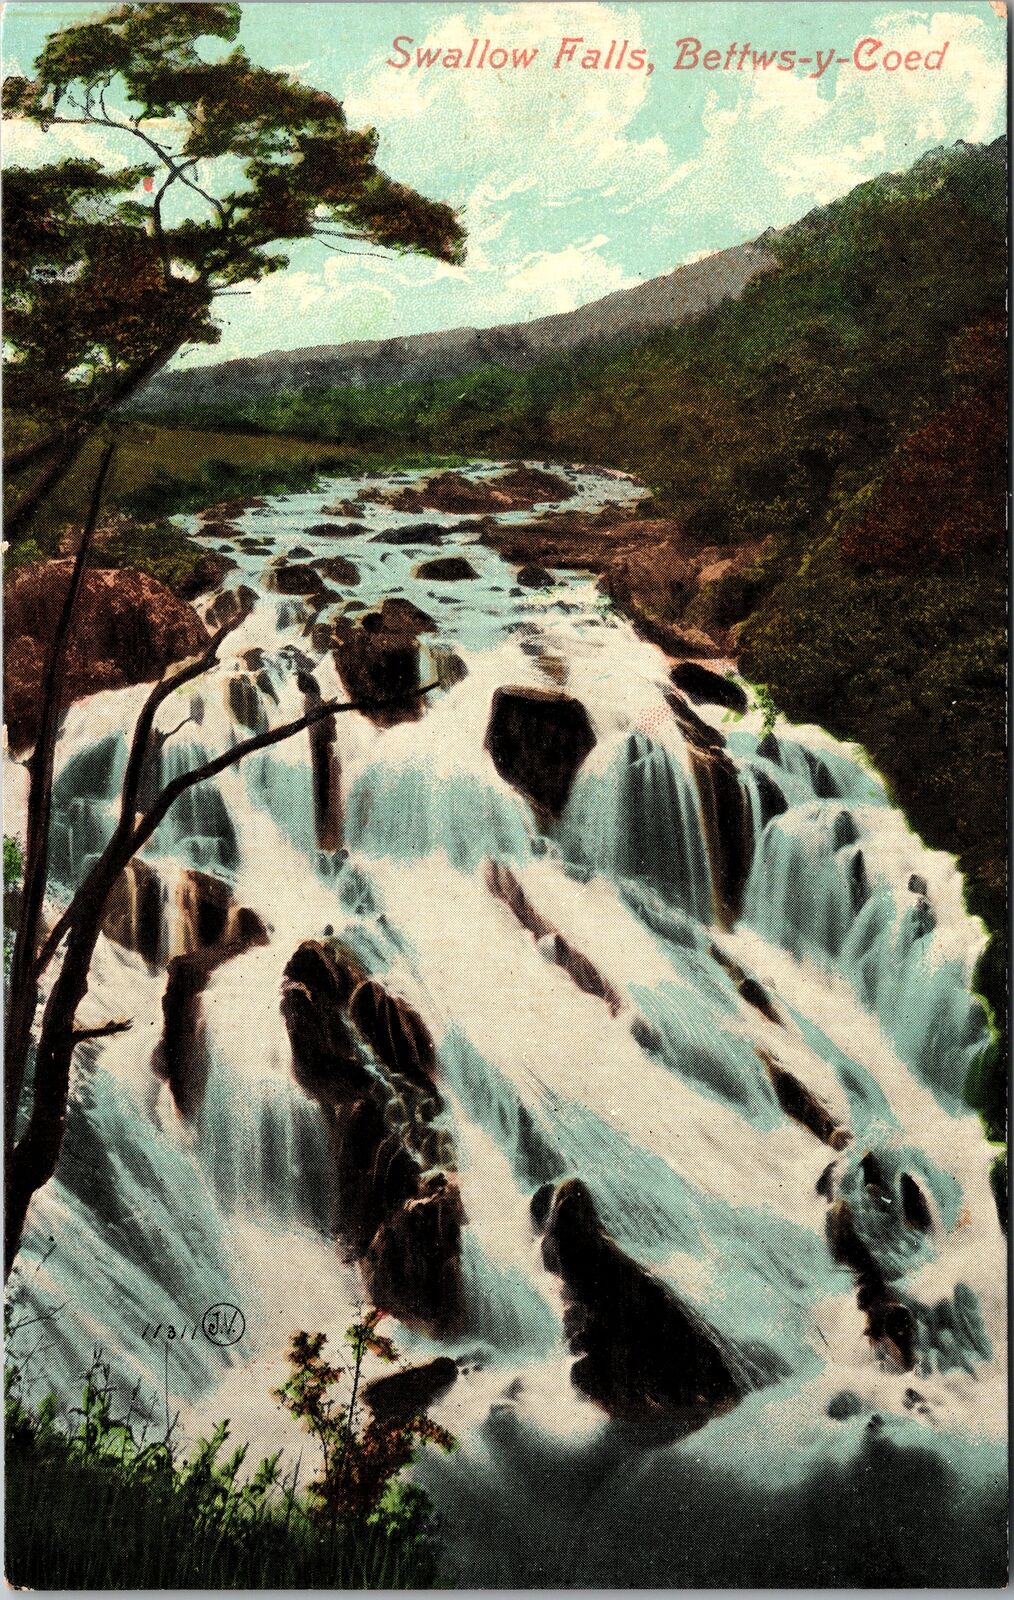 Betws-y-Coed Wales-Scenic Swallow Falls, Vintage Postcard